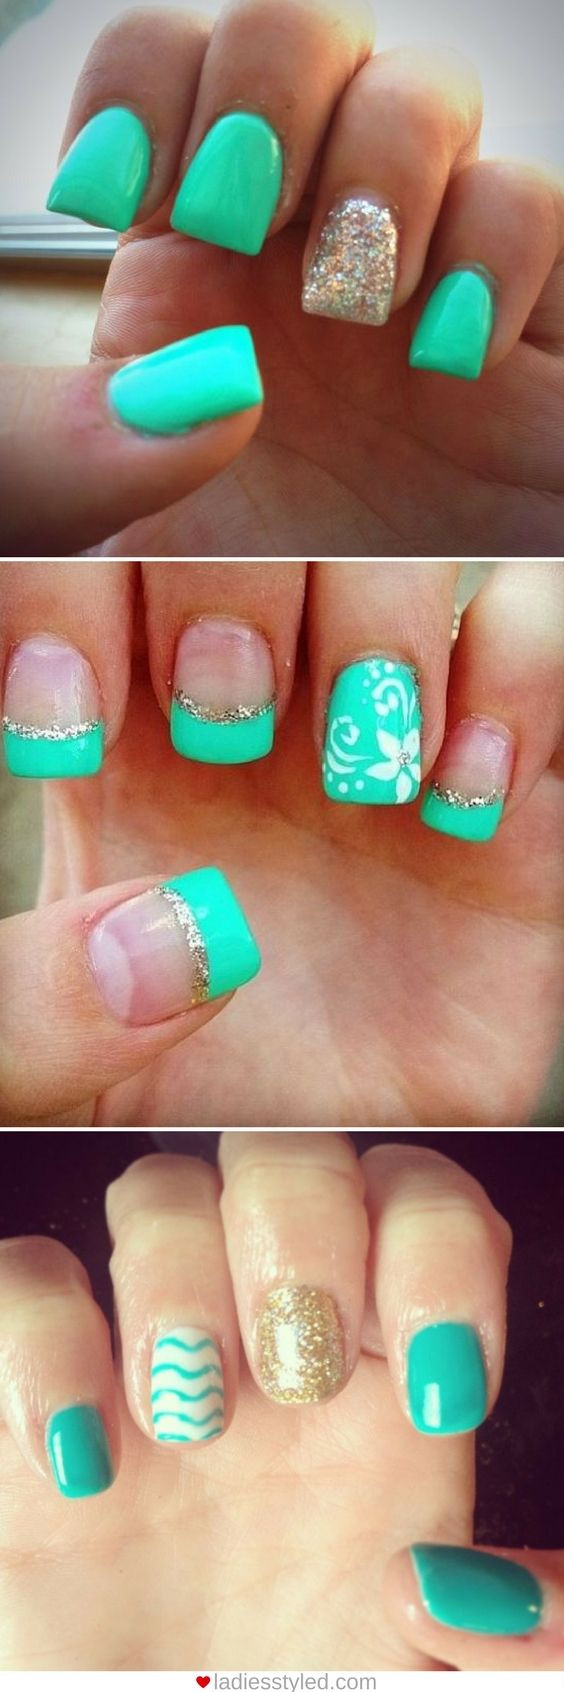 Cute Summer Nail Colors
 The 25 best Cute summer nails ideas on Pinterest